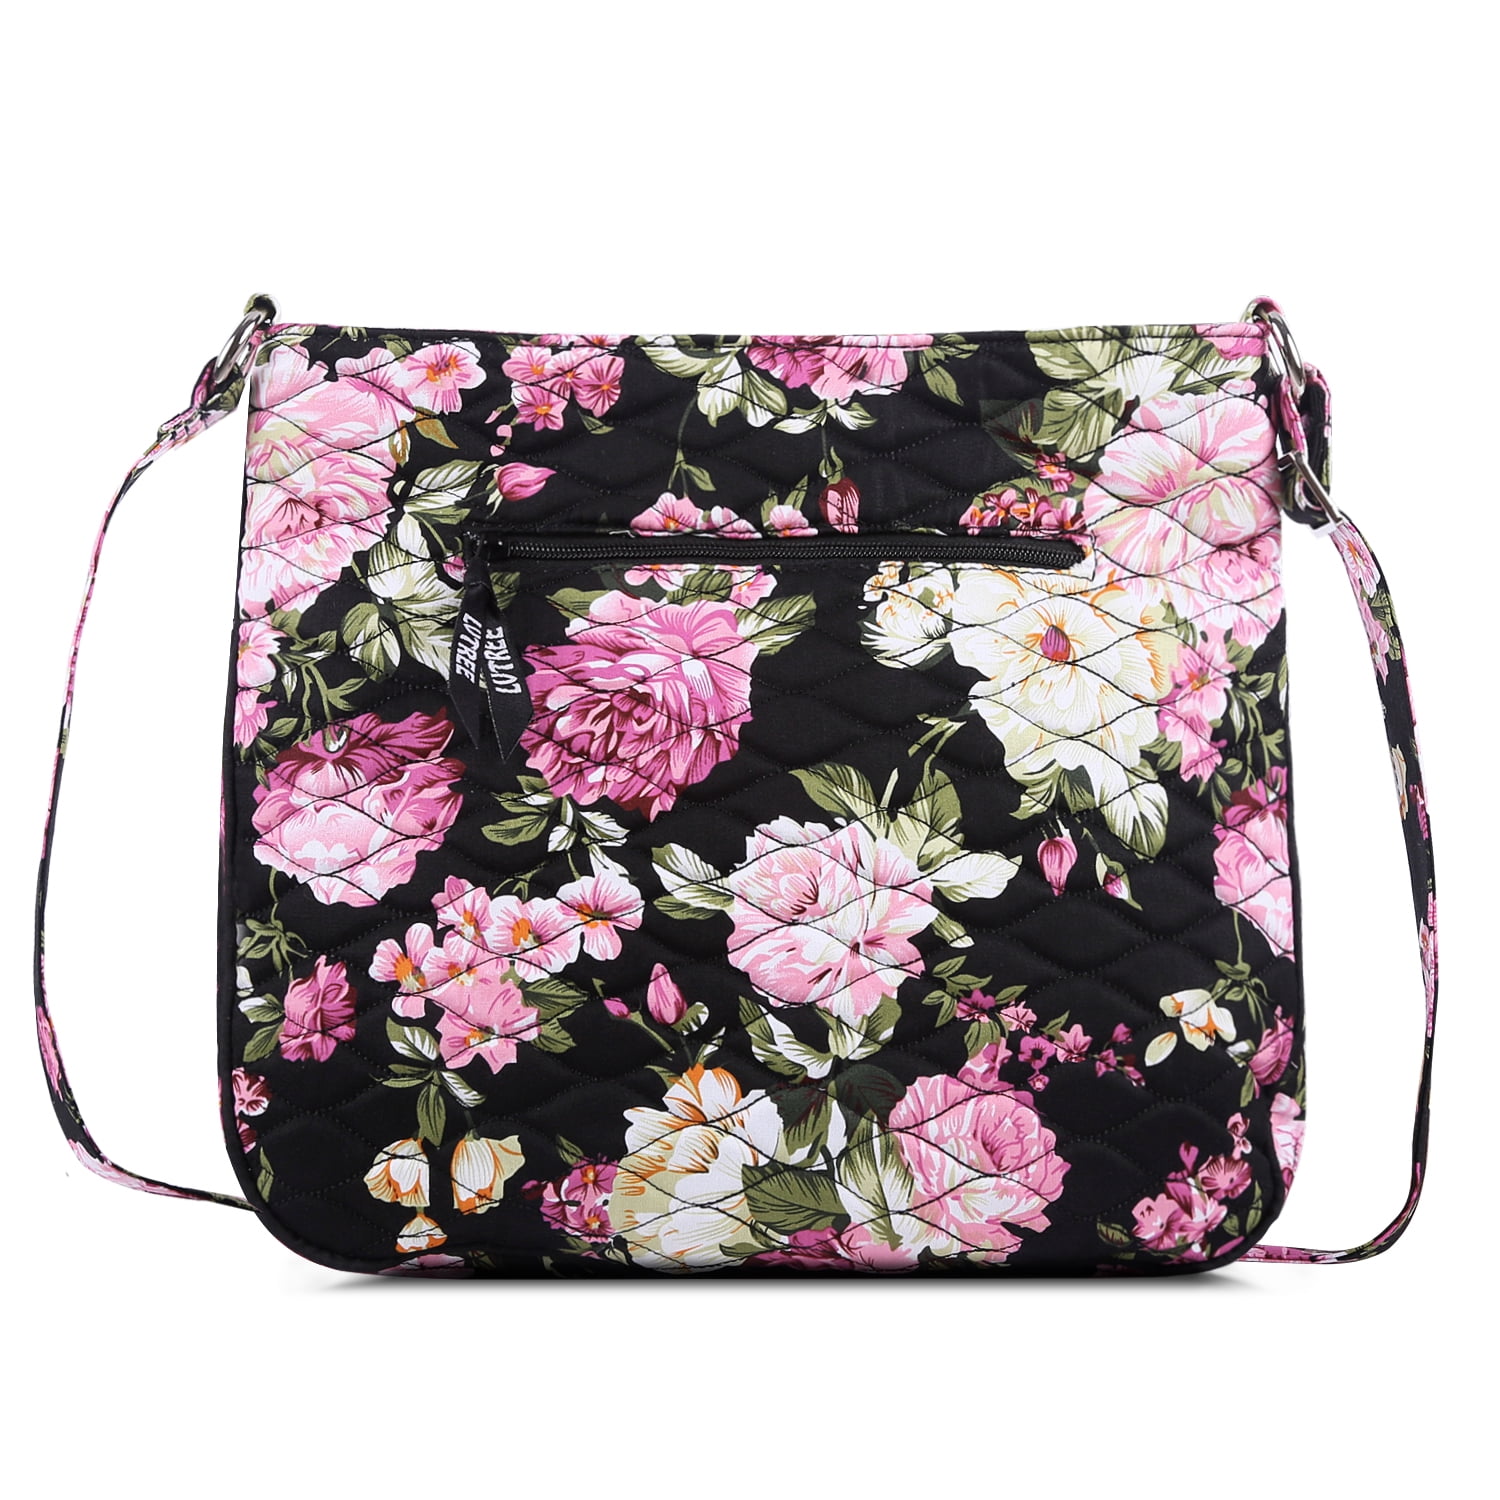 Lvtree Fashion Women's Shopping Tote Bag, Ladies Tote Cross-Body Large  Capacity Purse Travel Beach Shoulder Bag, Pink 